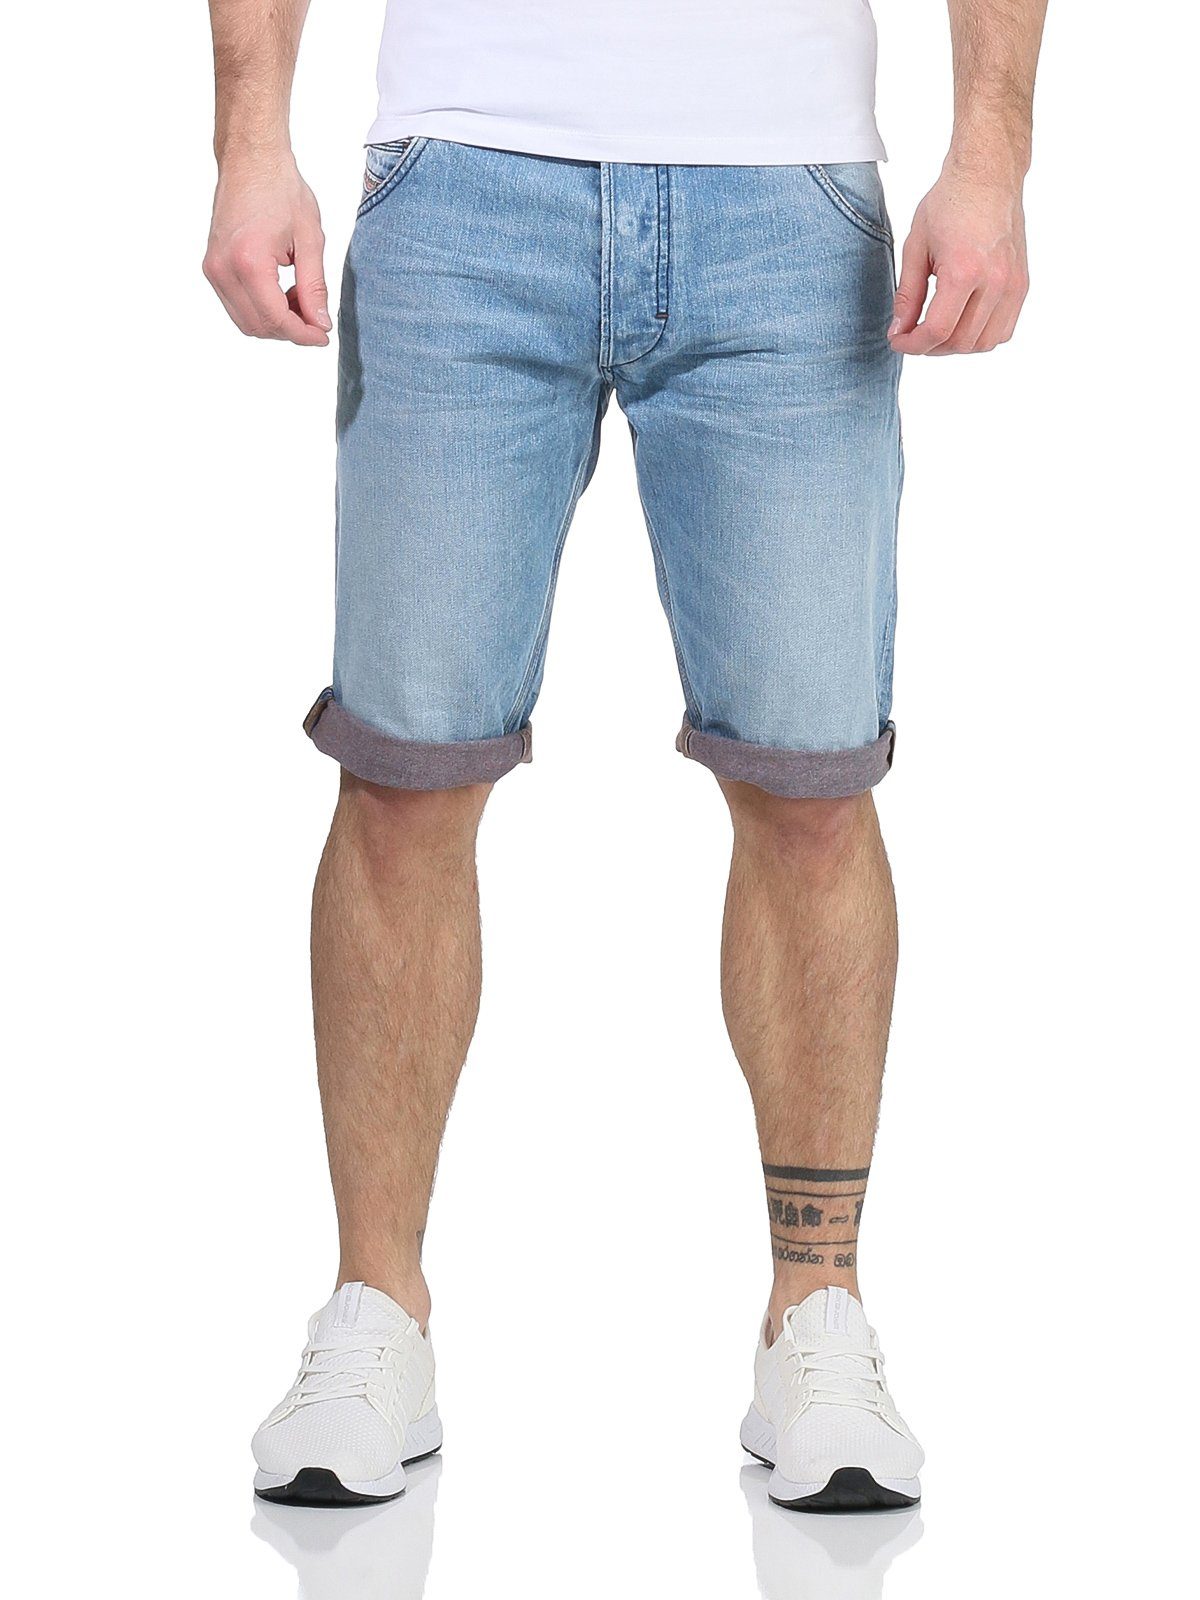 Shorts, dezenter Jeansshorts Diesel kurze Kroshort Herren Shorts R18K5 Jeans Hose Used-Look Hellblau RG48R